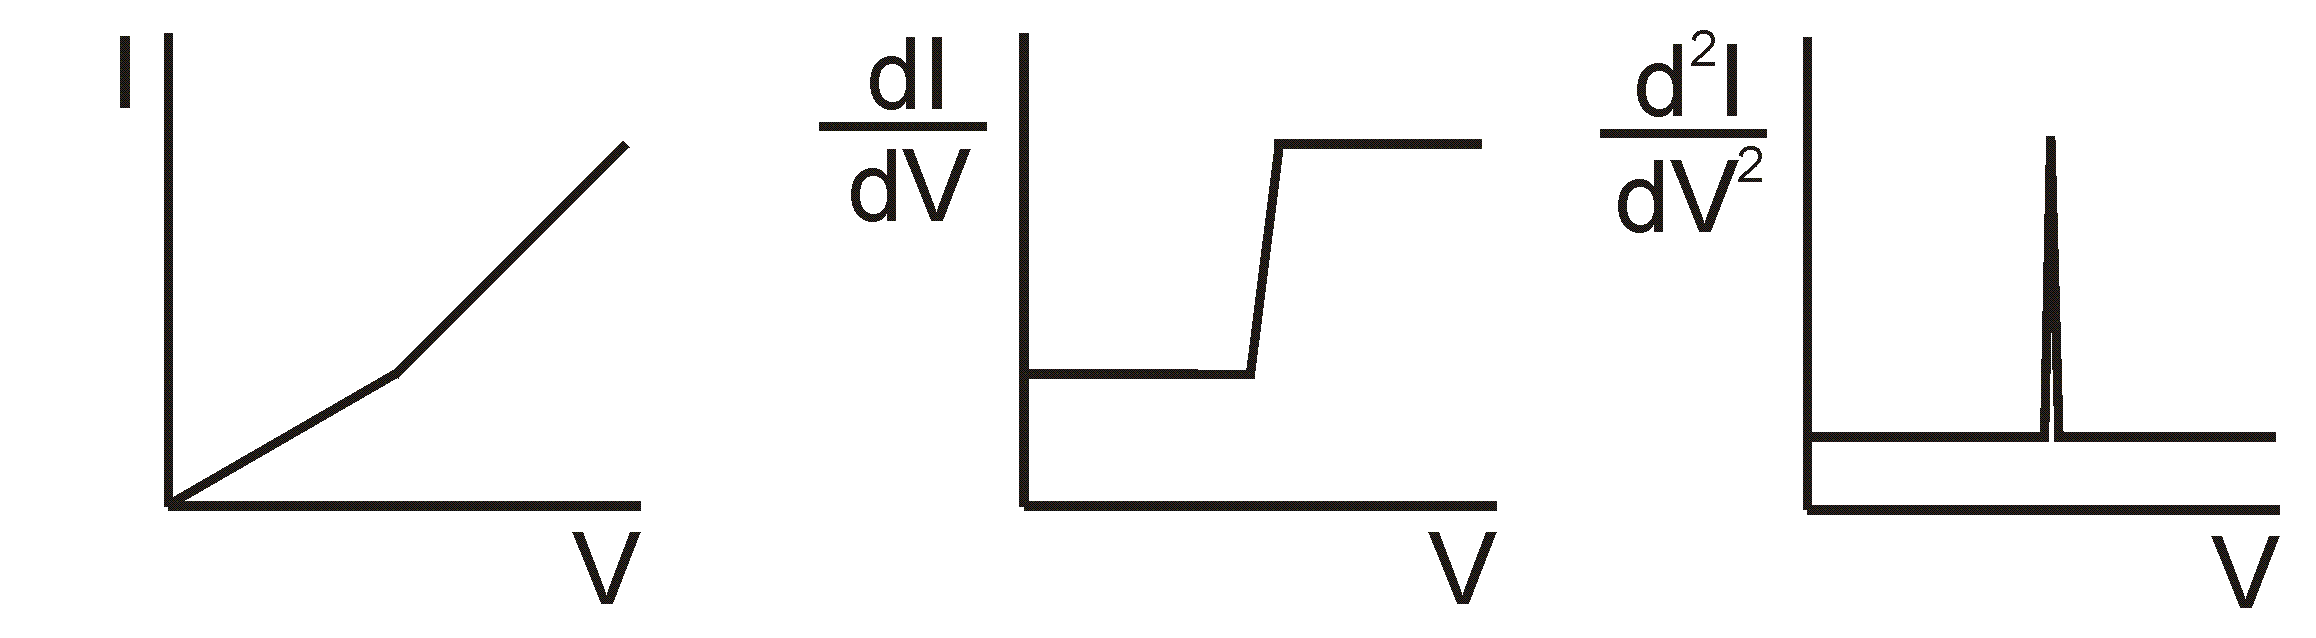 second derivative